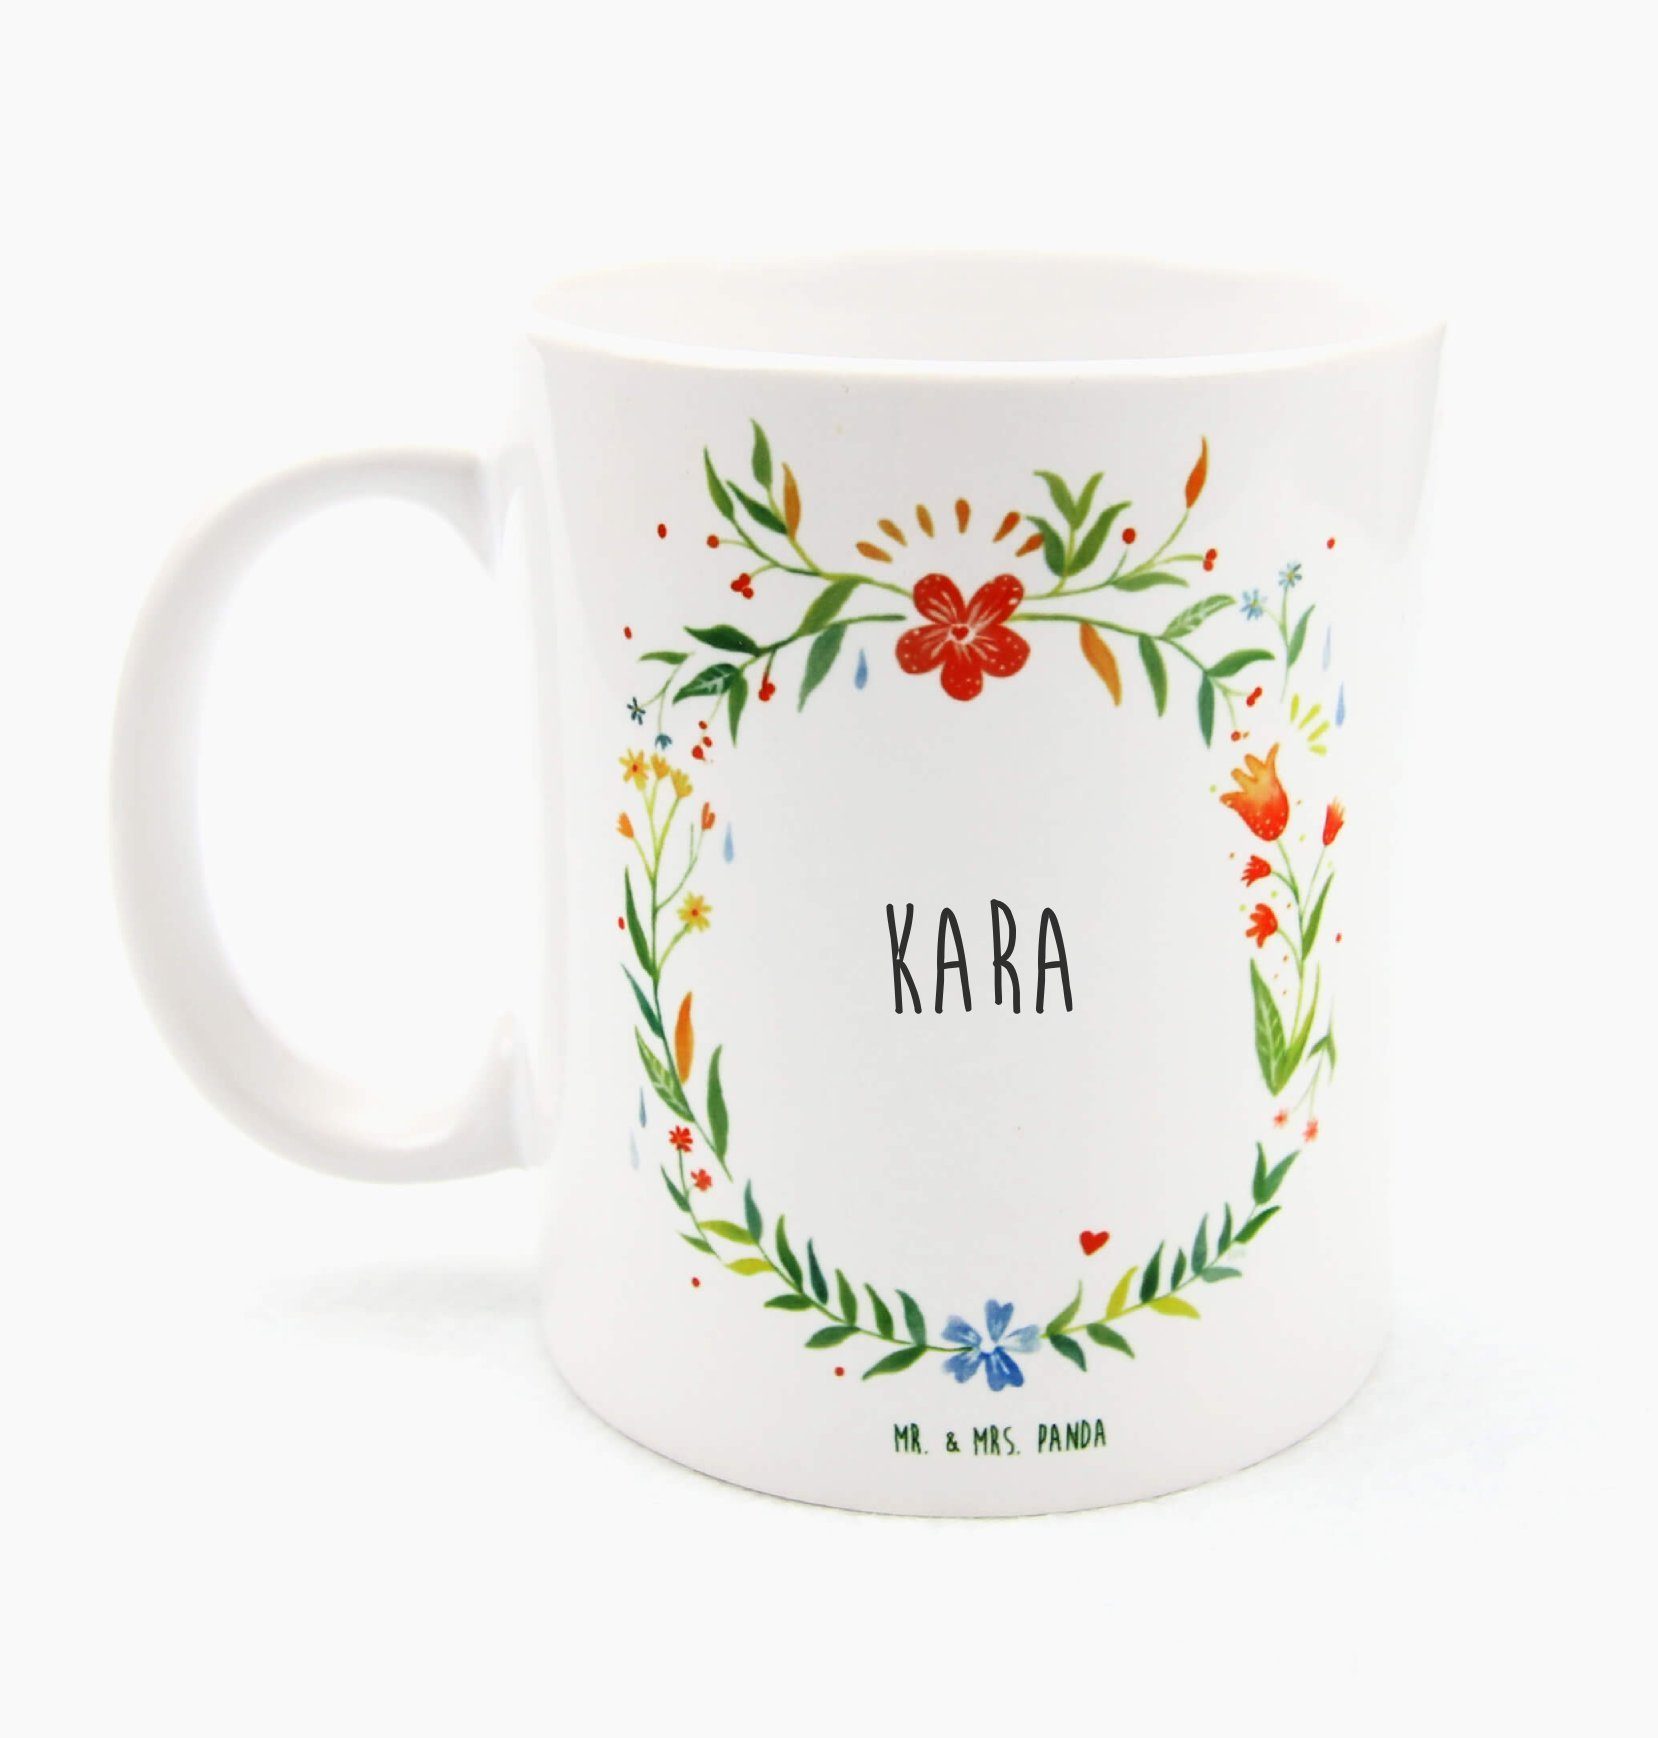 Mr. & Mrs. Panda Tasse Kara - Geschenk, Kaffeebecher, Tasse, Teetasse, Kaffeetasse, Porzella, Keramik